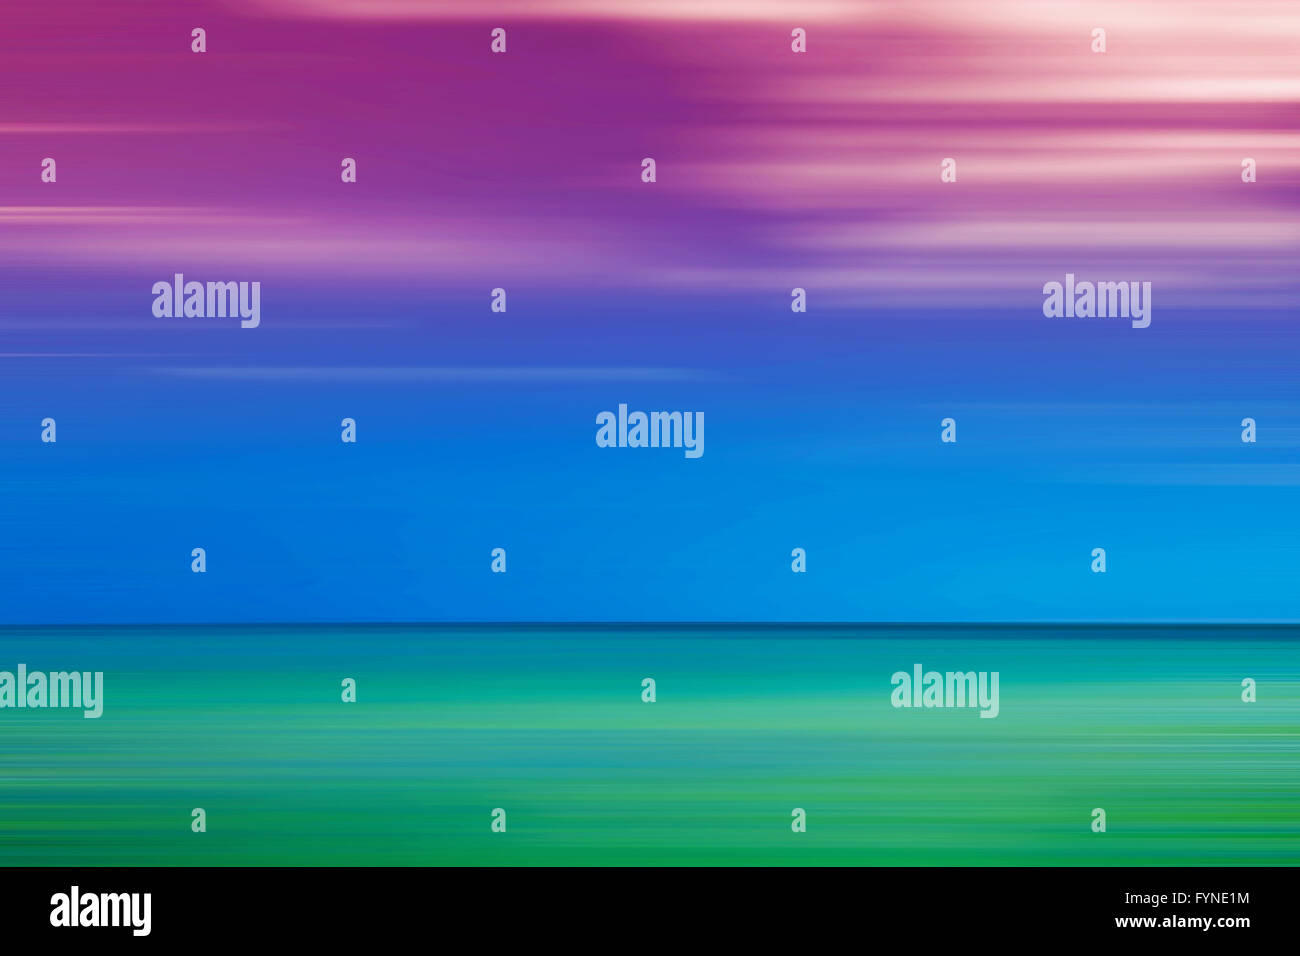 Blurred sea horizon. One third of the image is green, one third is blue and one third is purple. Stock Photo